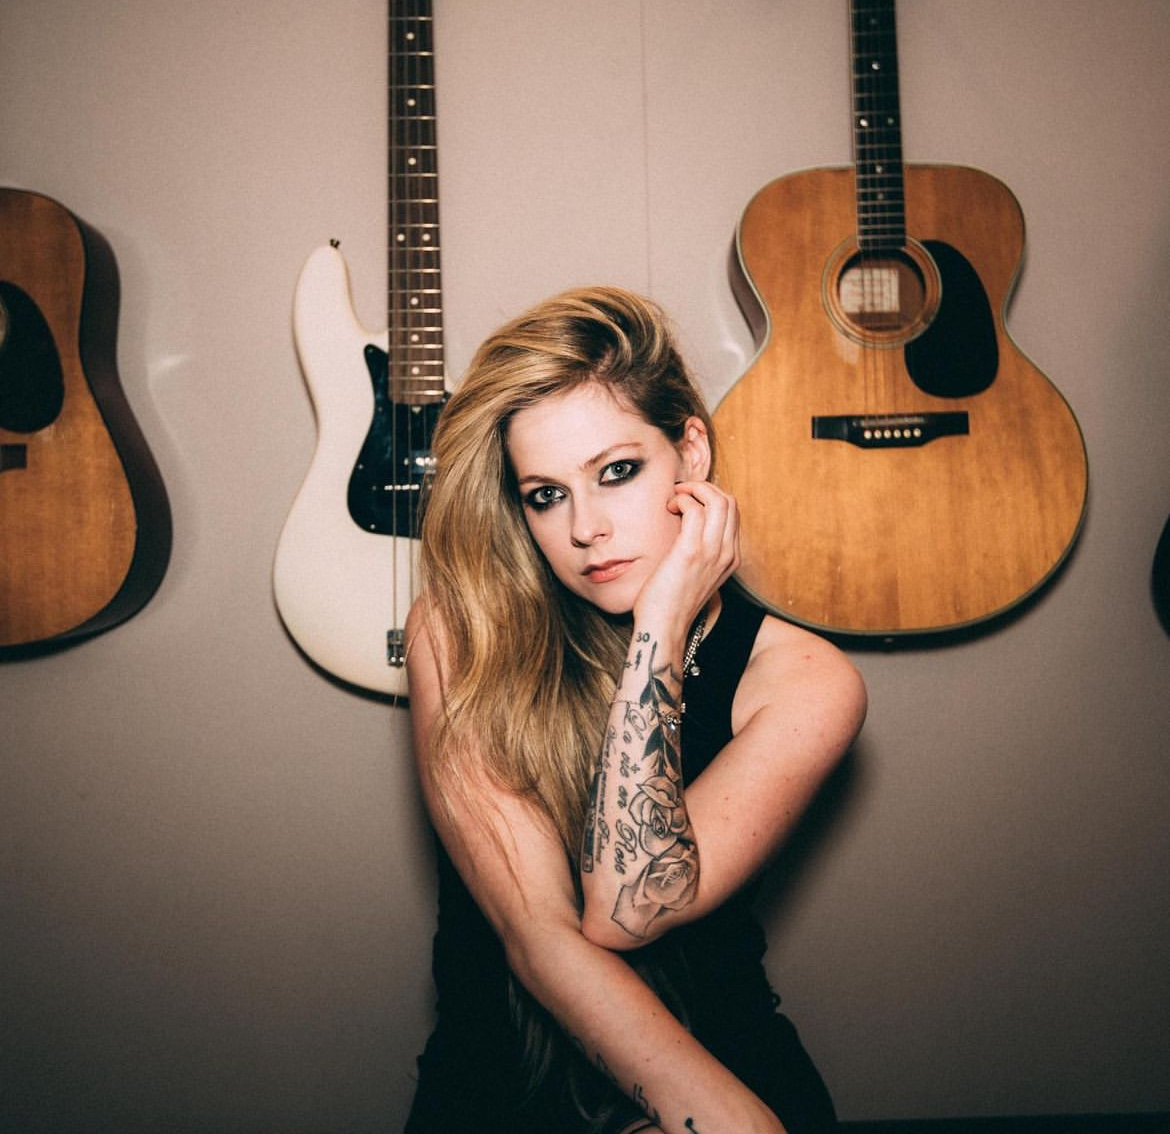 Avril Lavigne posing in front of her guitars. 